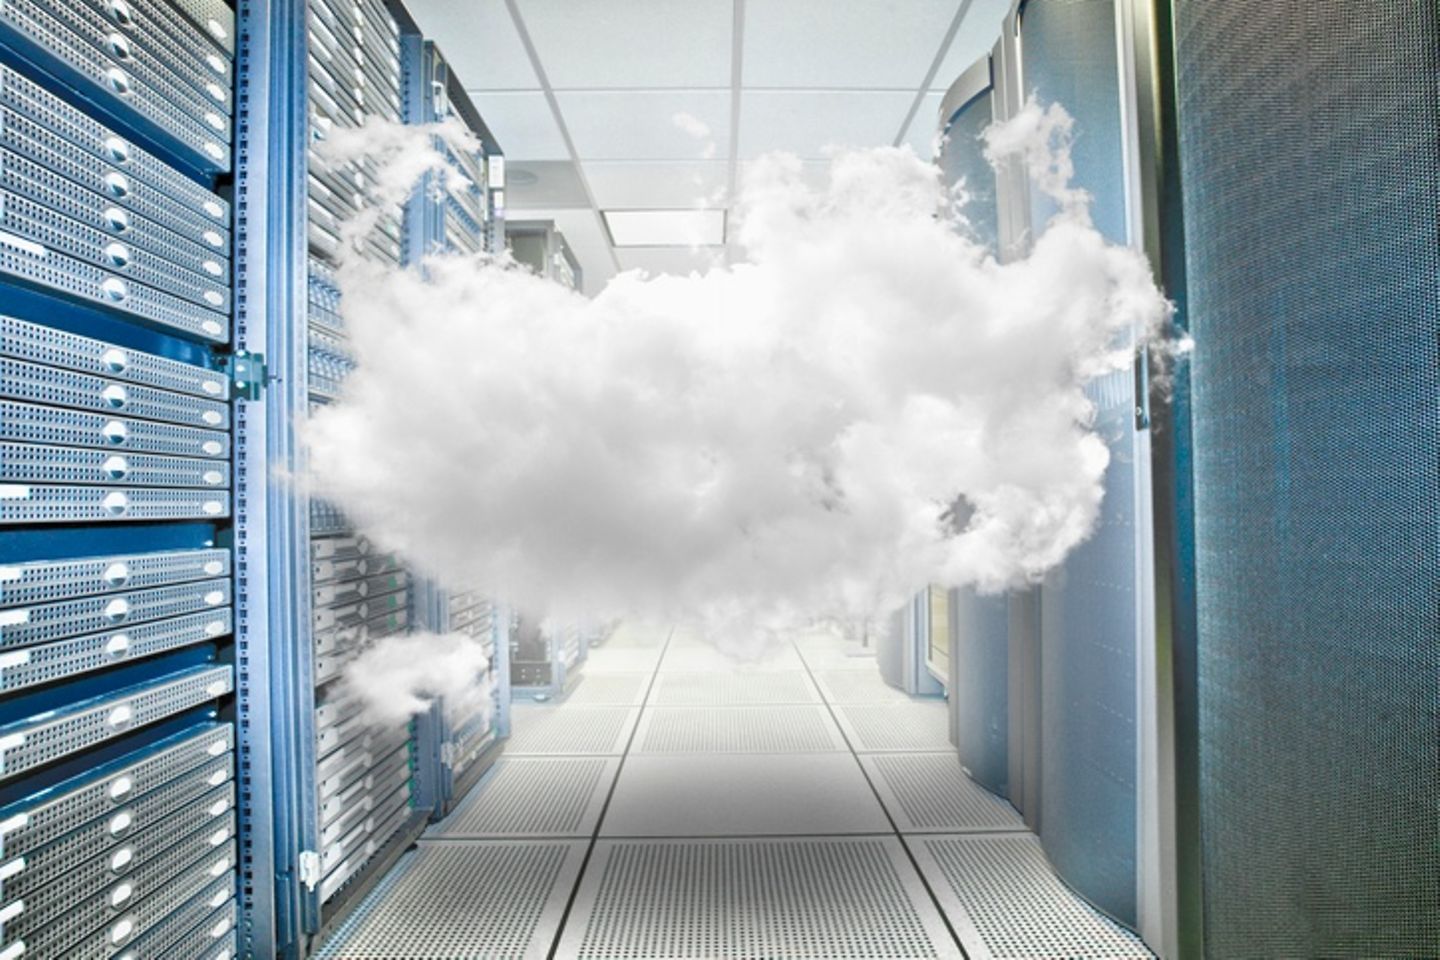 Cloud hanging between racks in the server room.